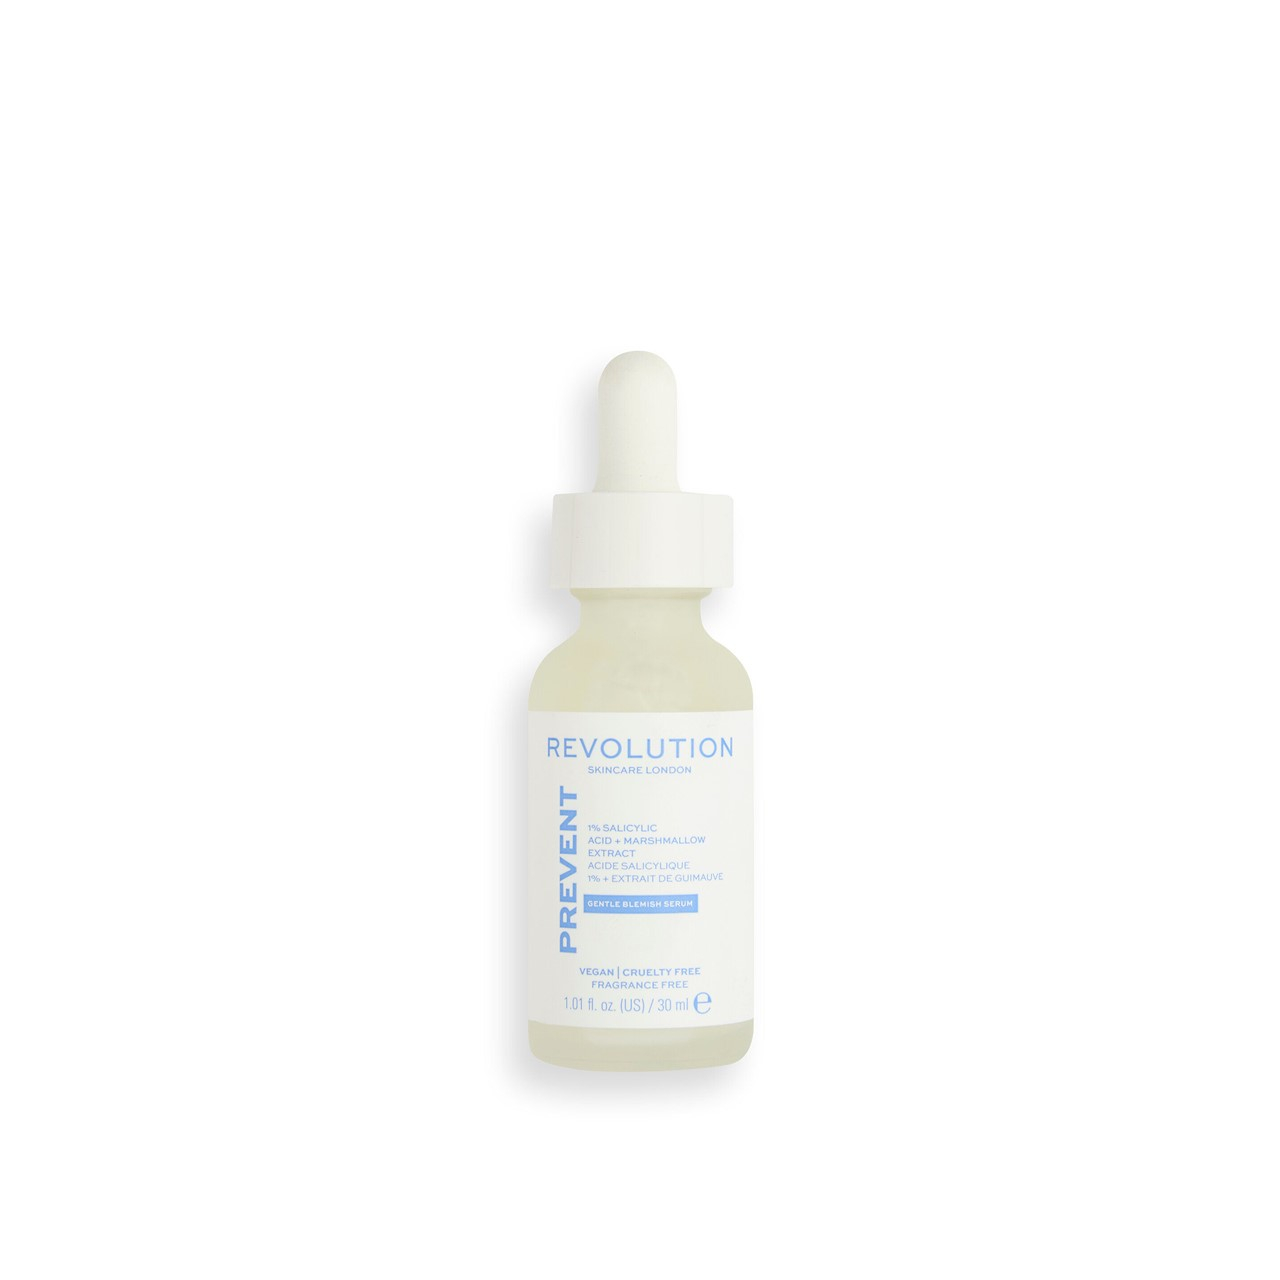 Revolution Skincare Prevent Gentle Blemish Serum 30ml (1.01fl oz)